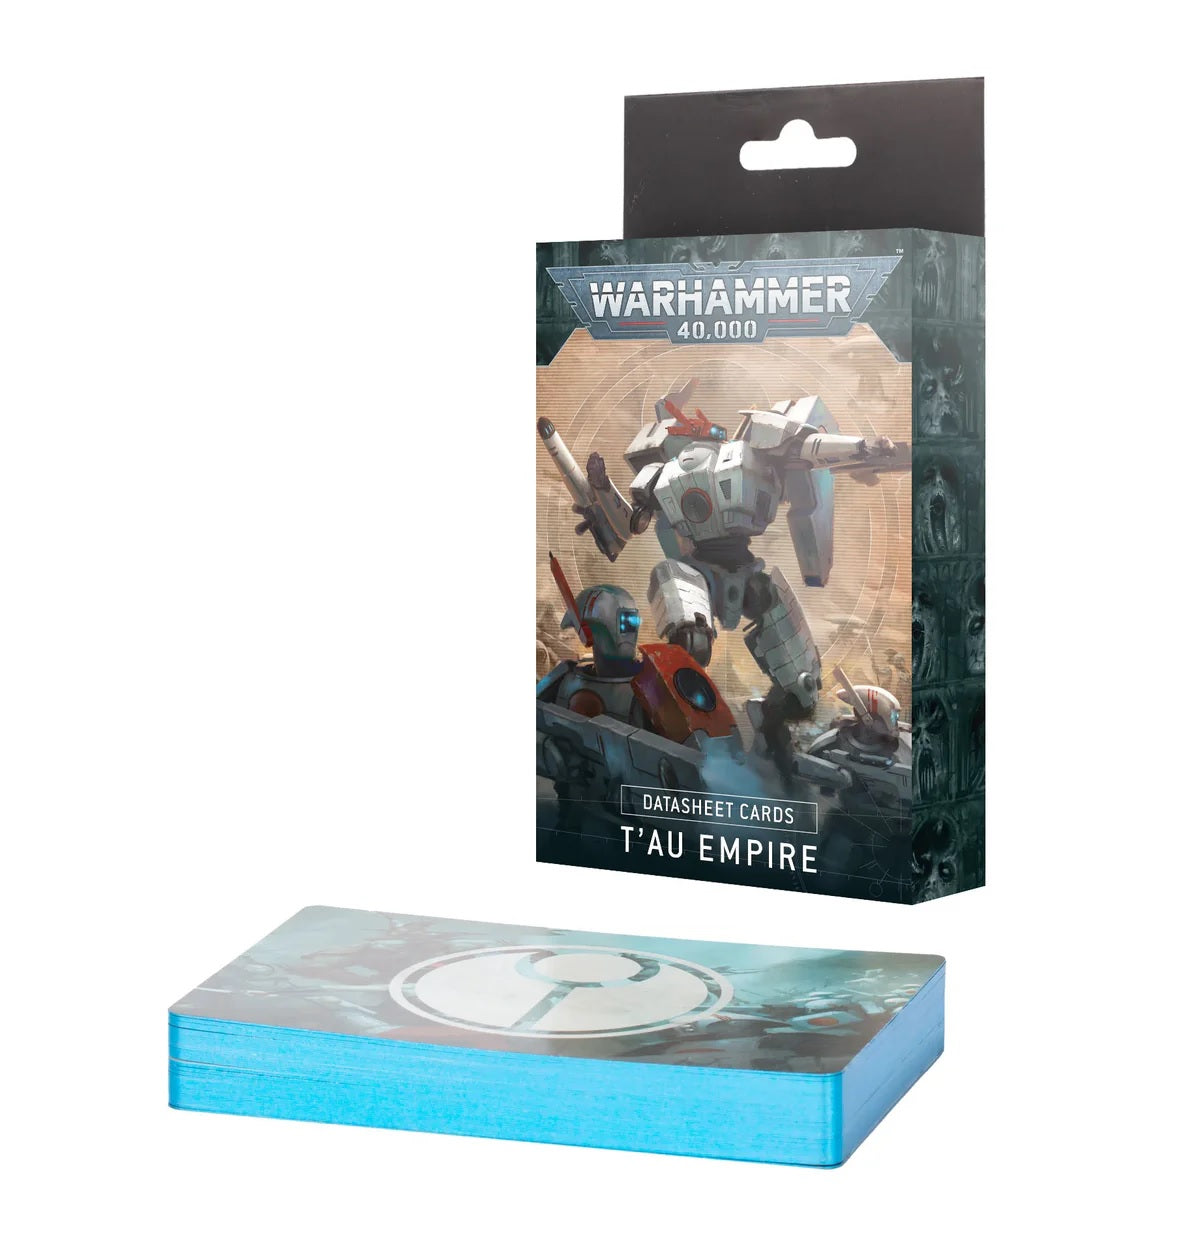 Warhammer 40,000 T'au Empire Datasheet Cards MKDLOGXEWI |0|